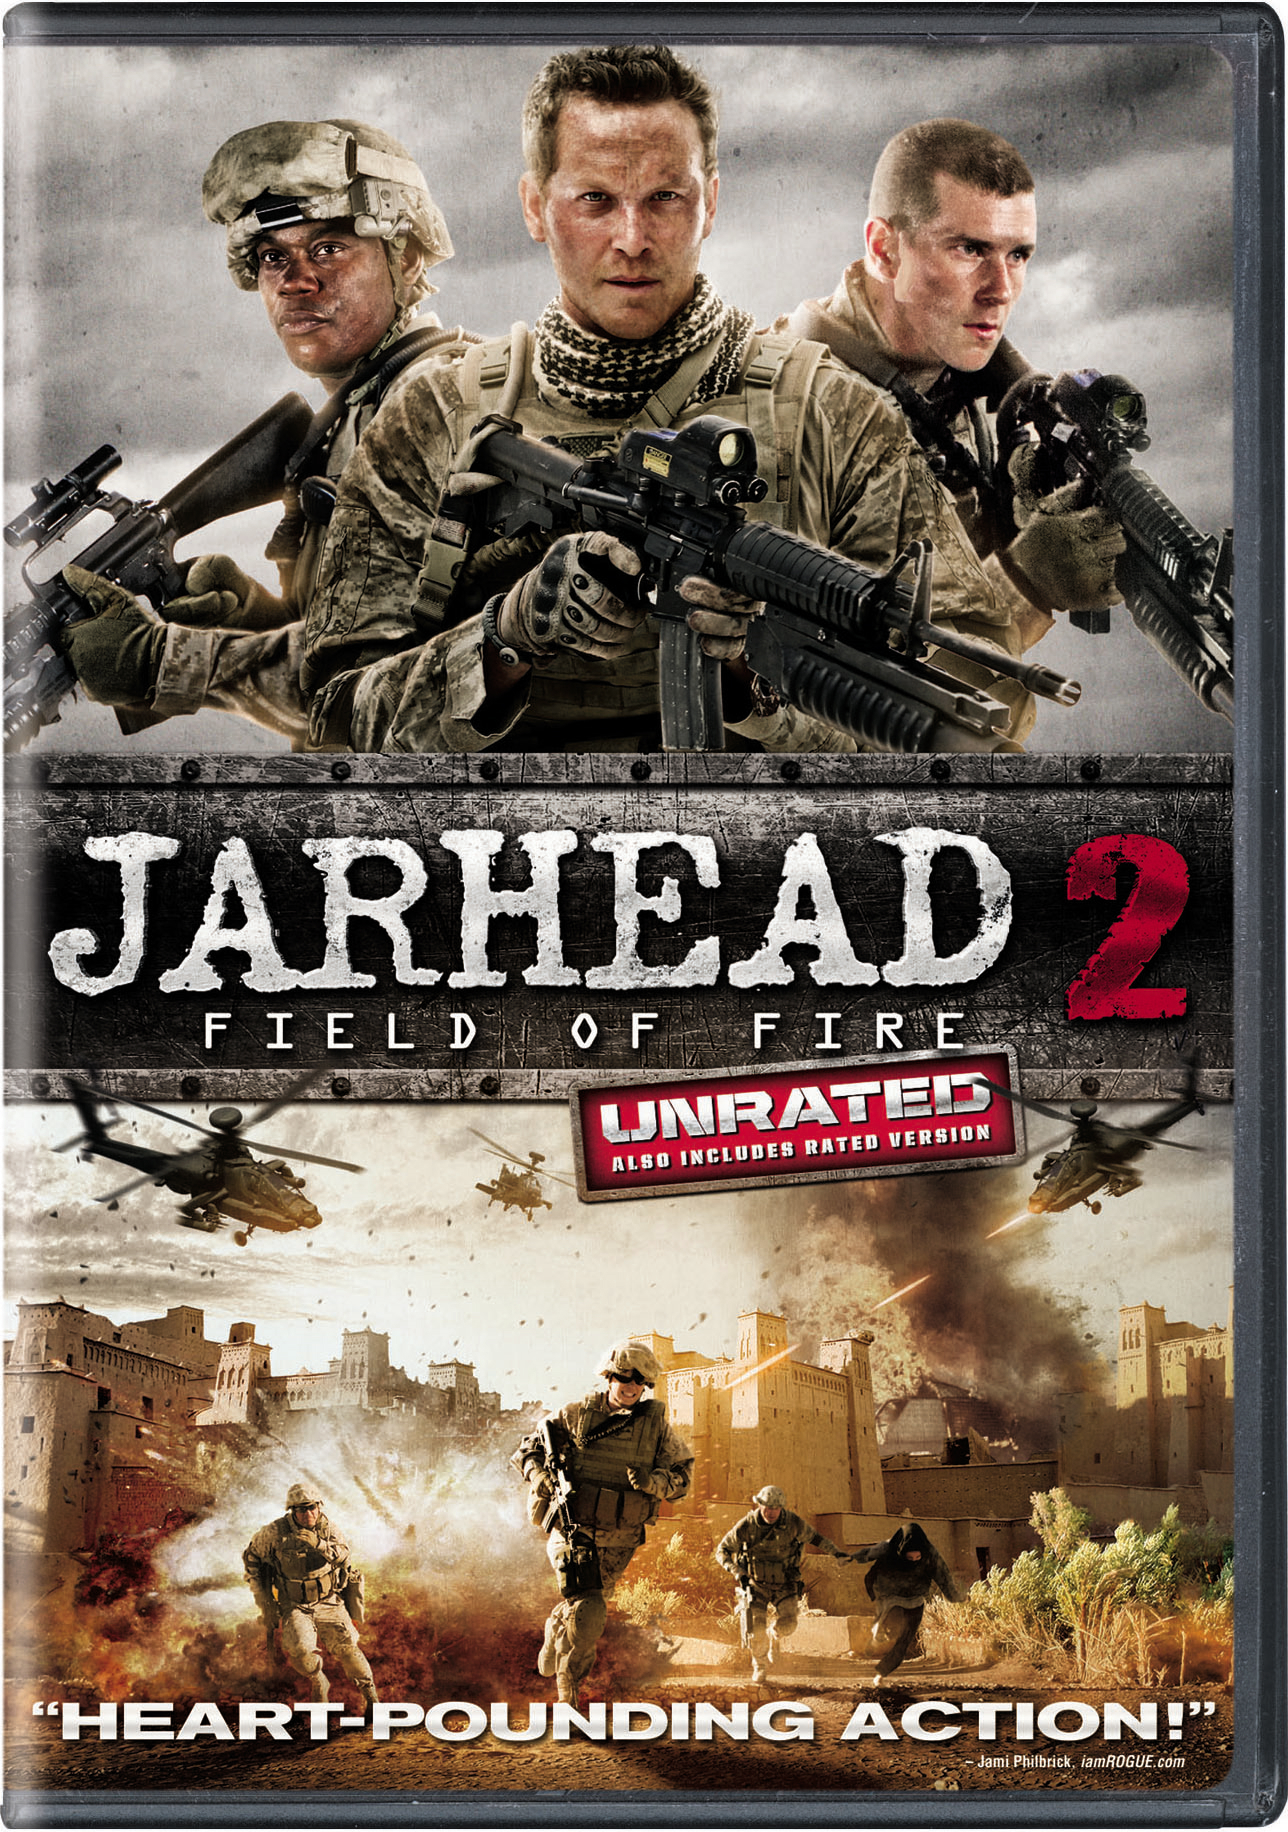 Jarhead 2 - Field Of Fire - DVD [ 2014 ]  - War Movies On DVD - Movies On GRUV